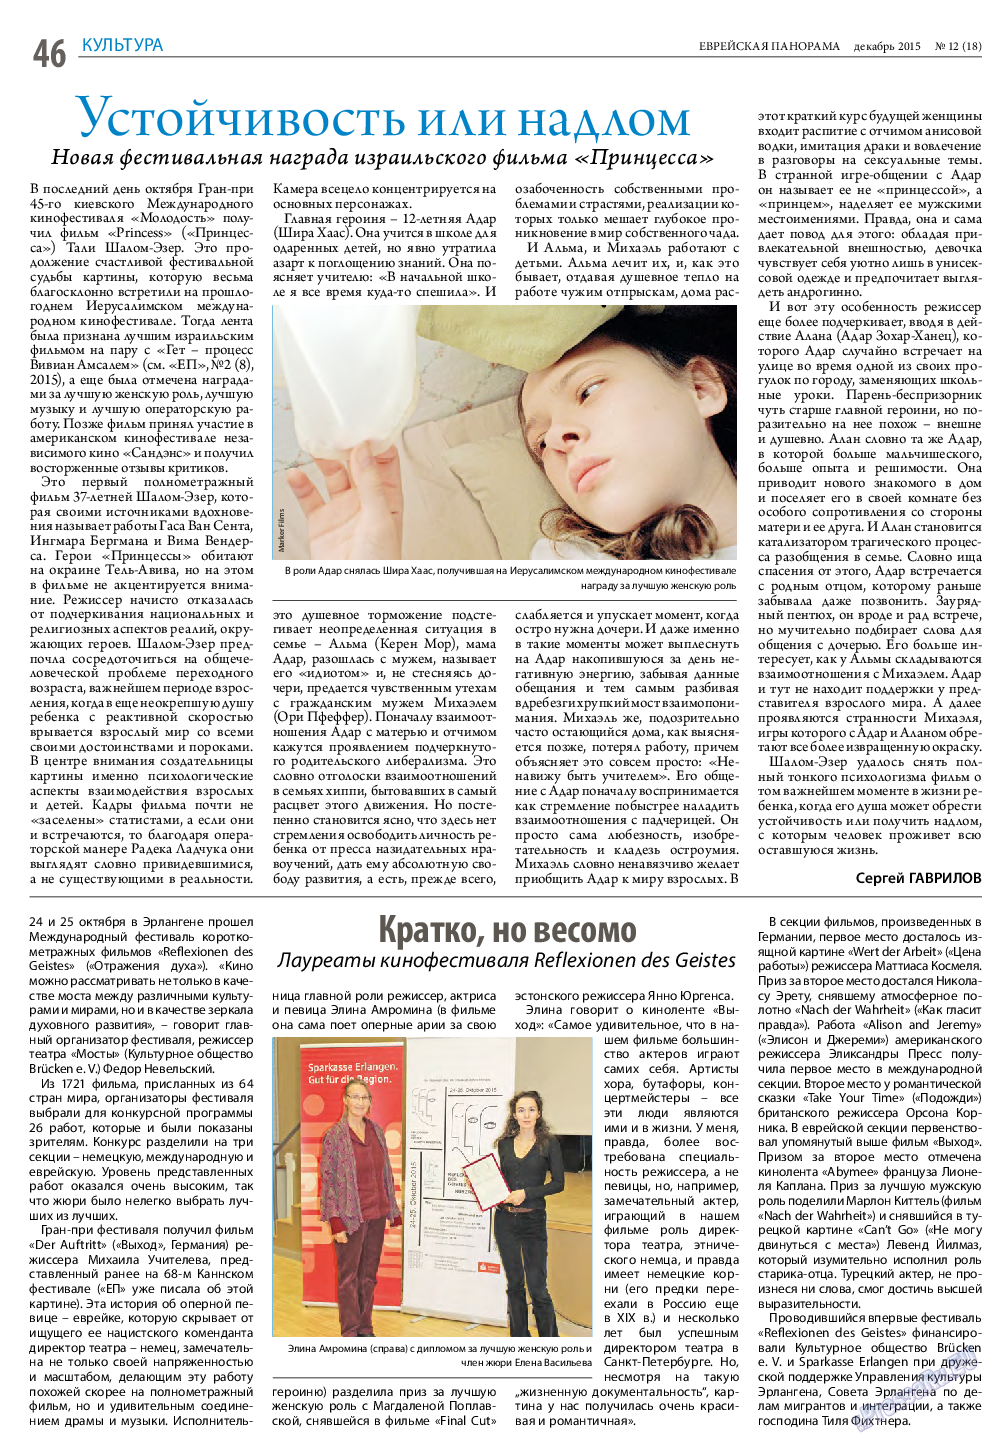 Еврейская панорама, газета. 2015 №12 стр.46